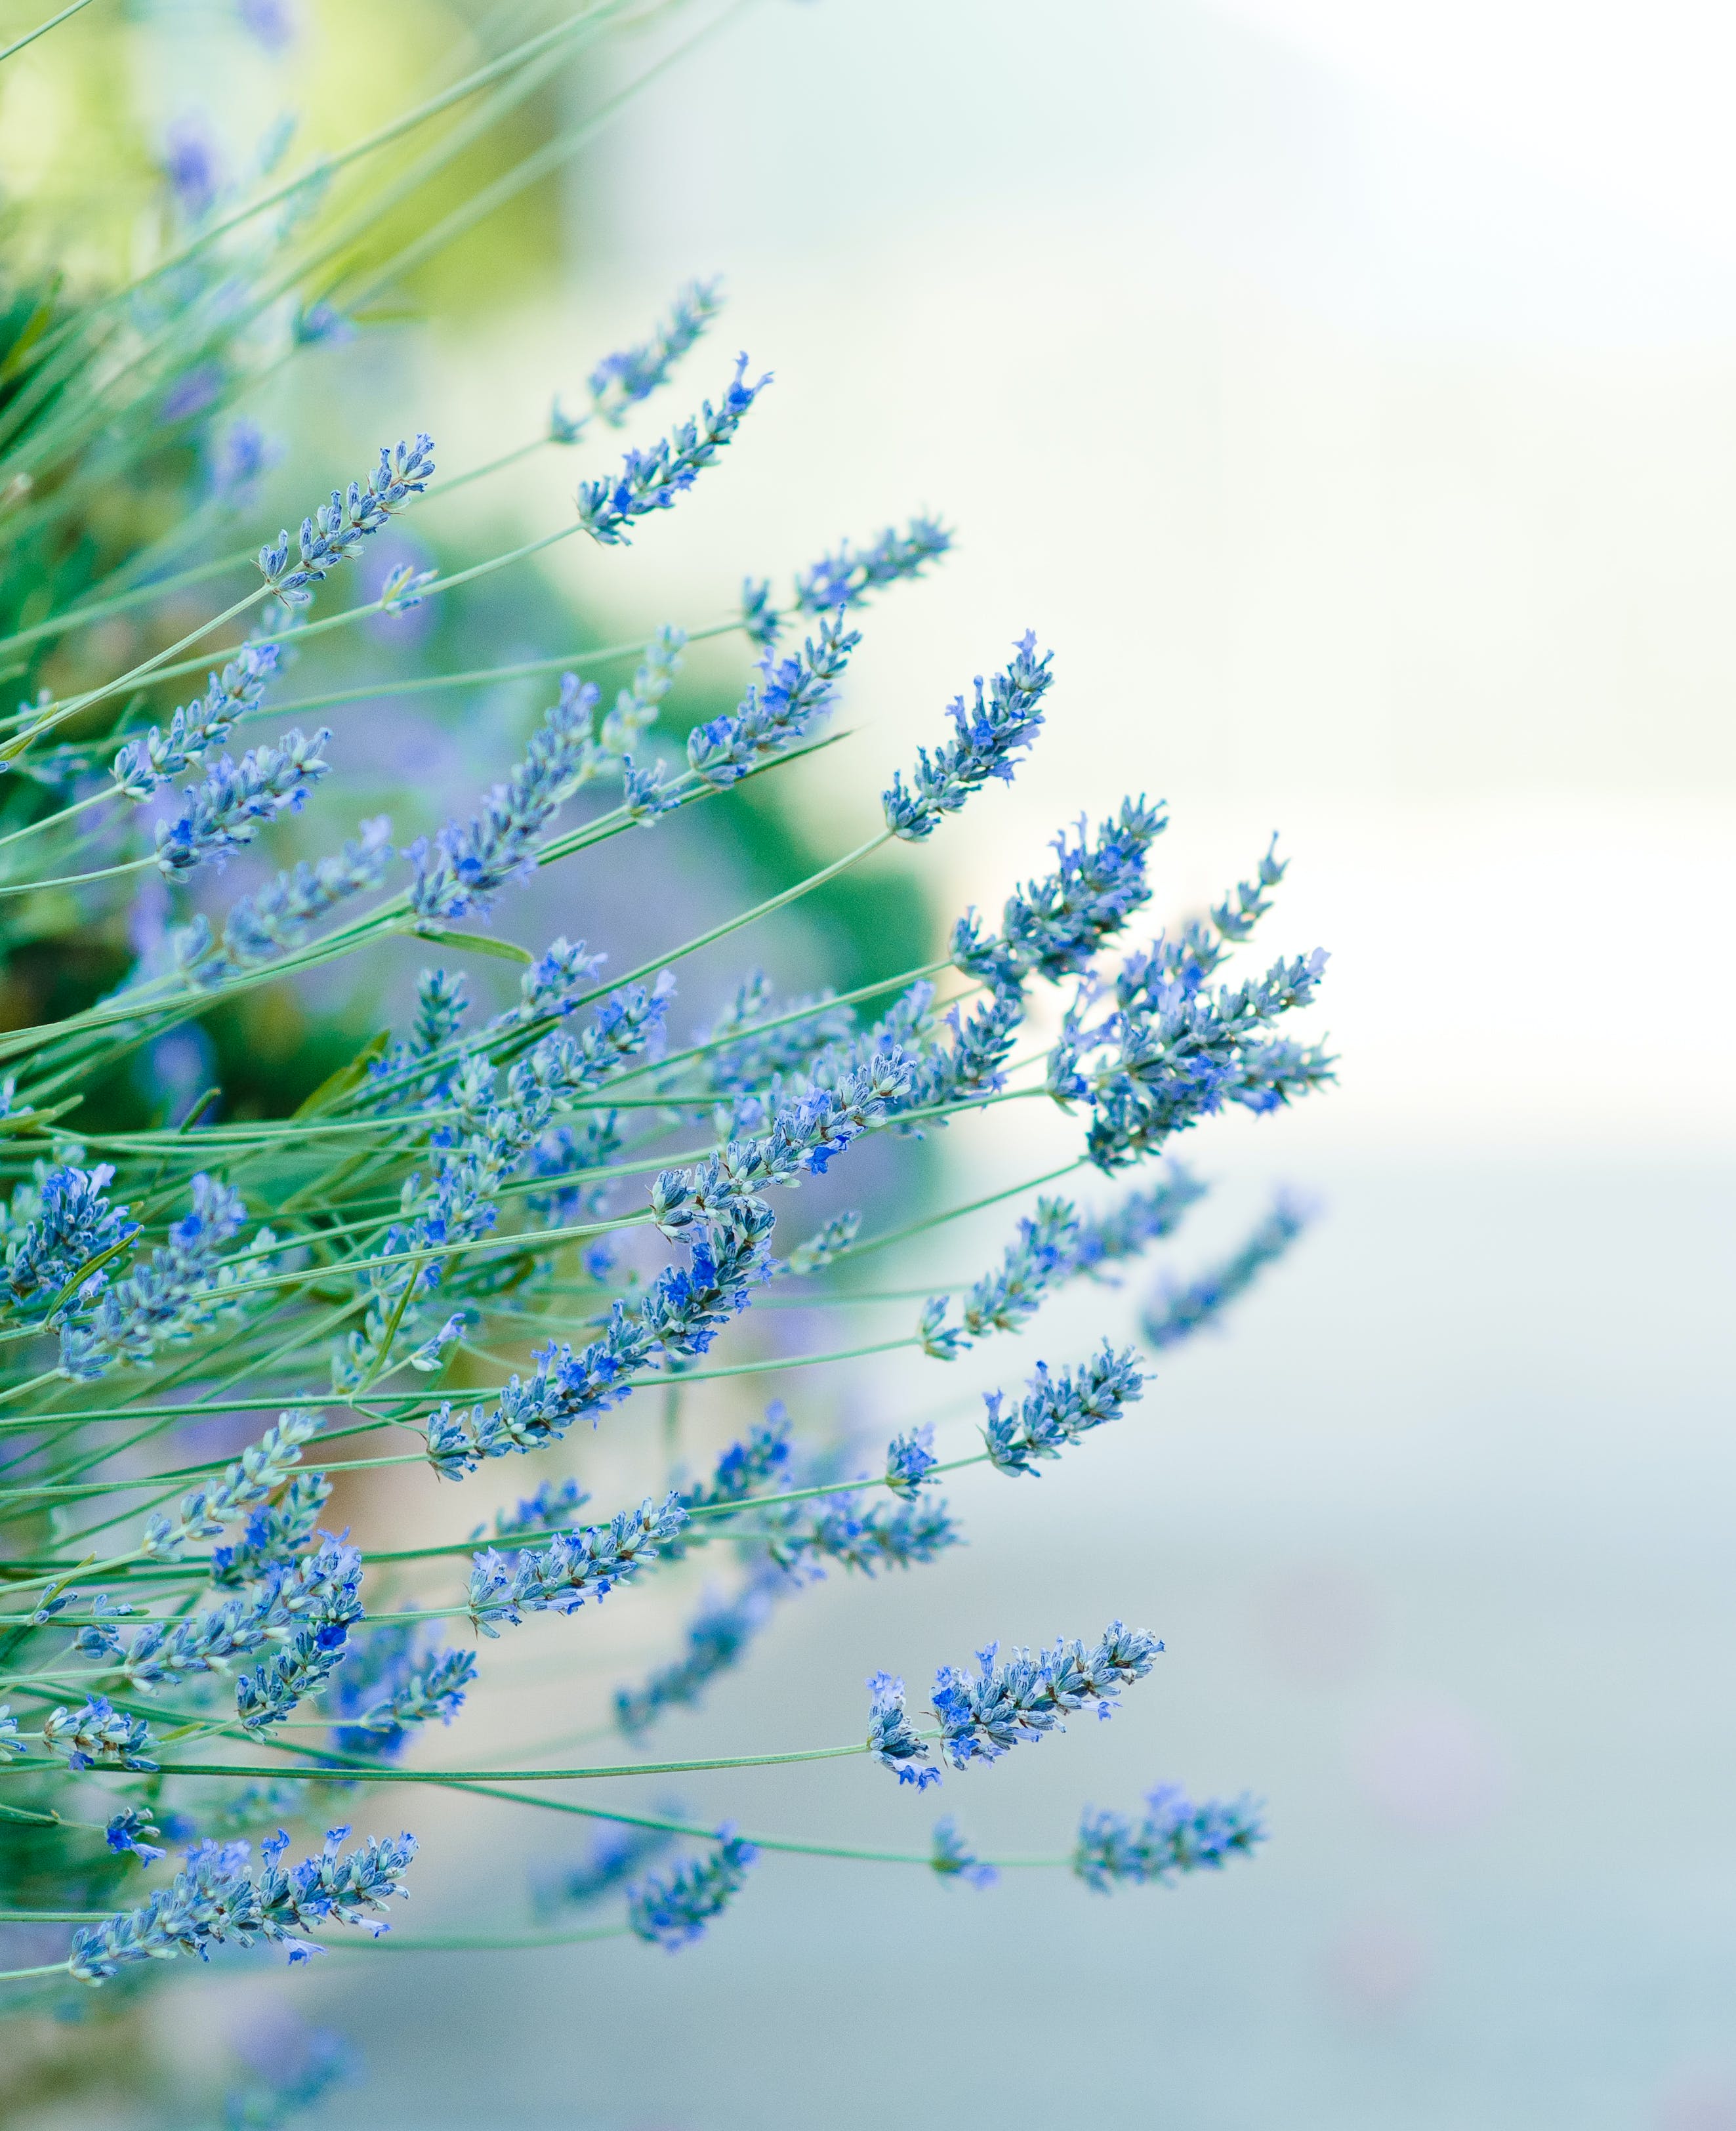 Blue Flowers in the Garden · Free